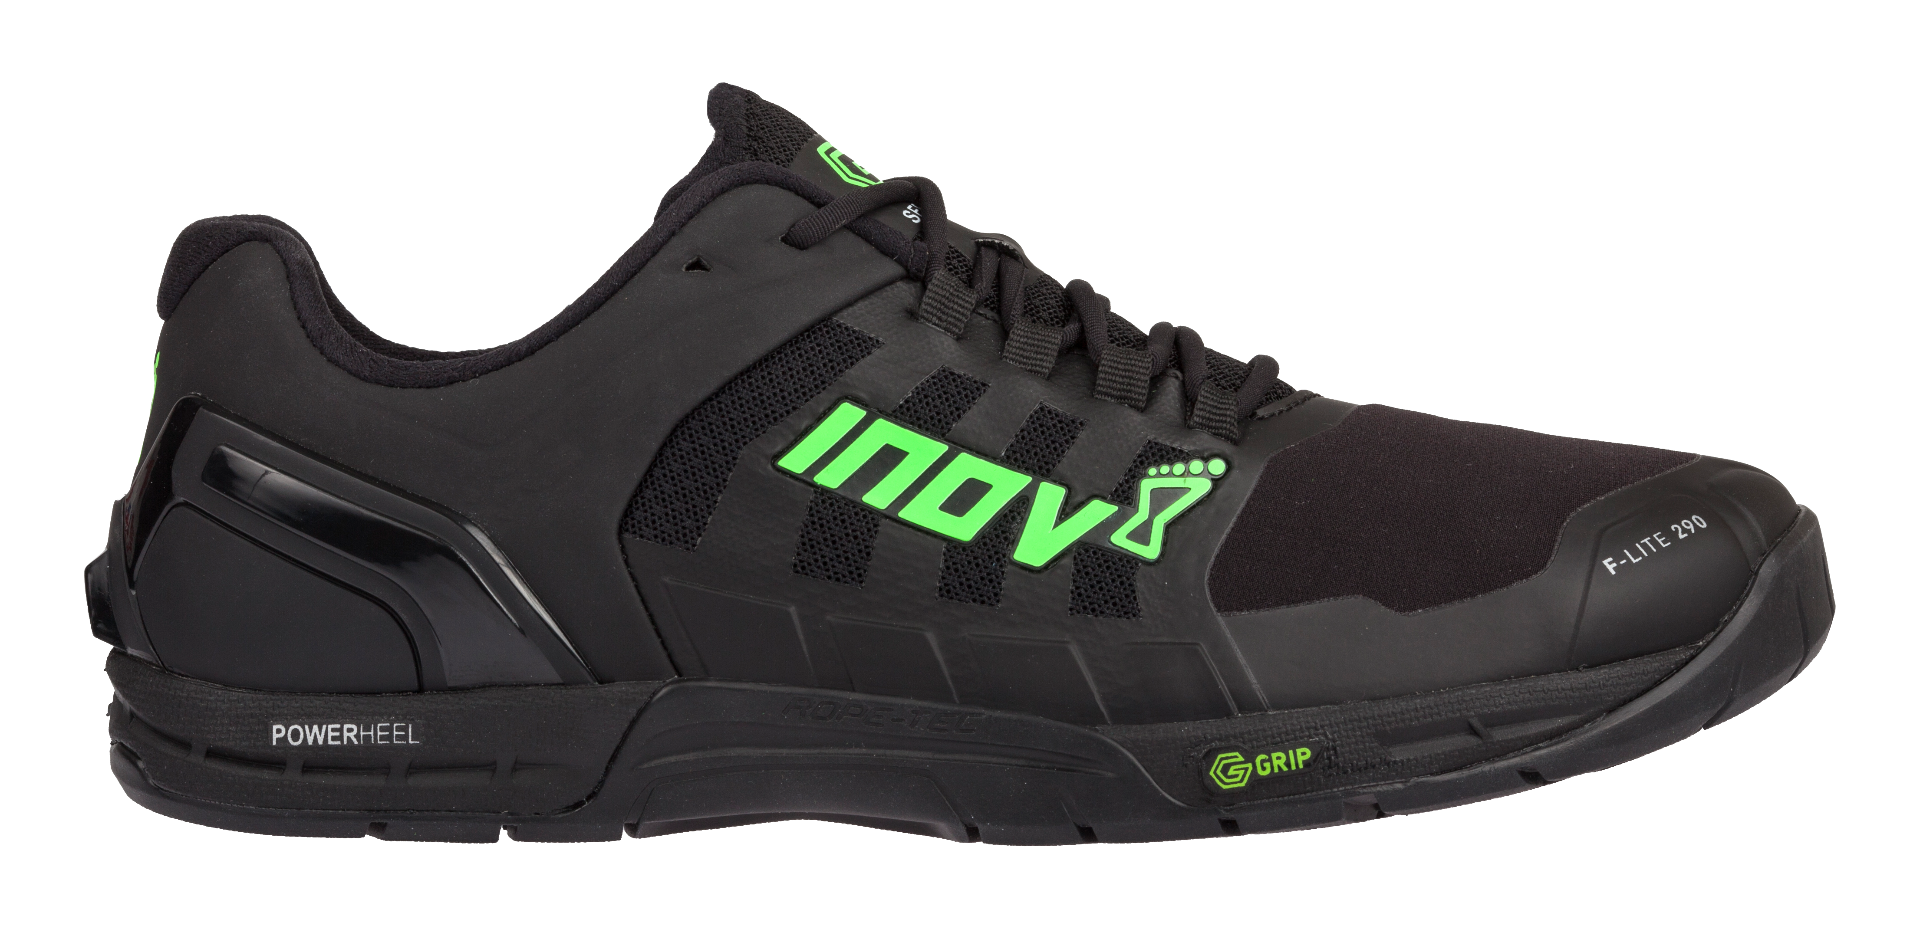 Best Inov-8 Running Shoes 2020 | Inov-8 